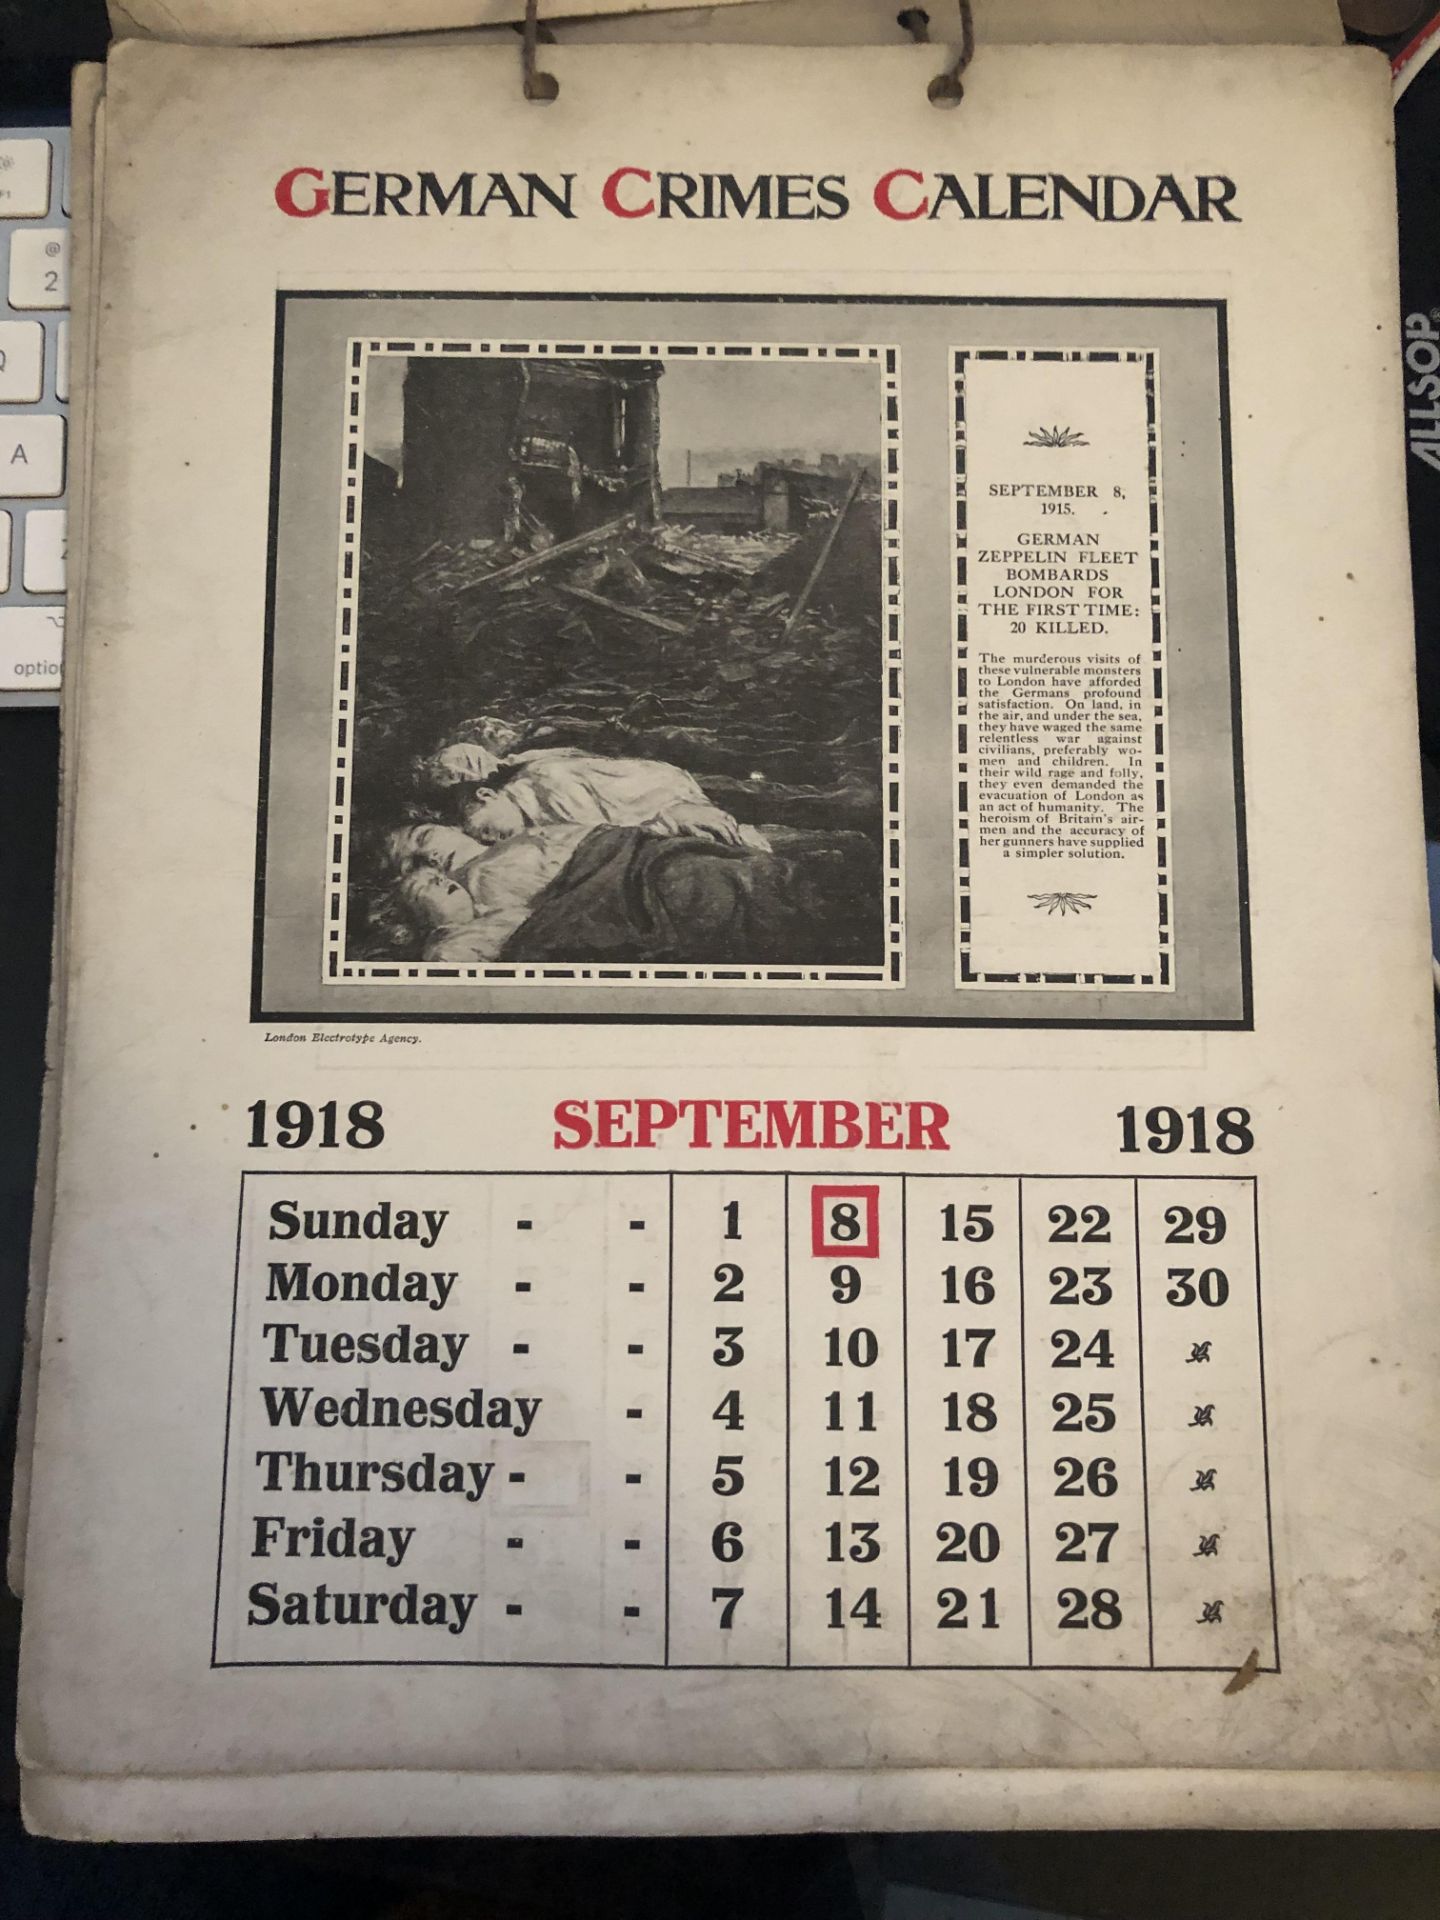 1918 German Crimes Calendar - Image 5 of 12